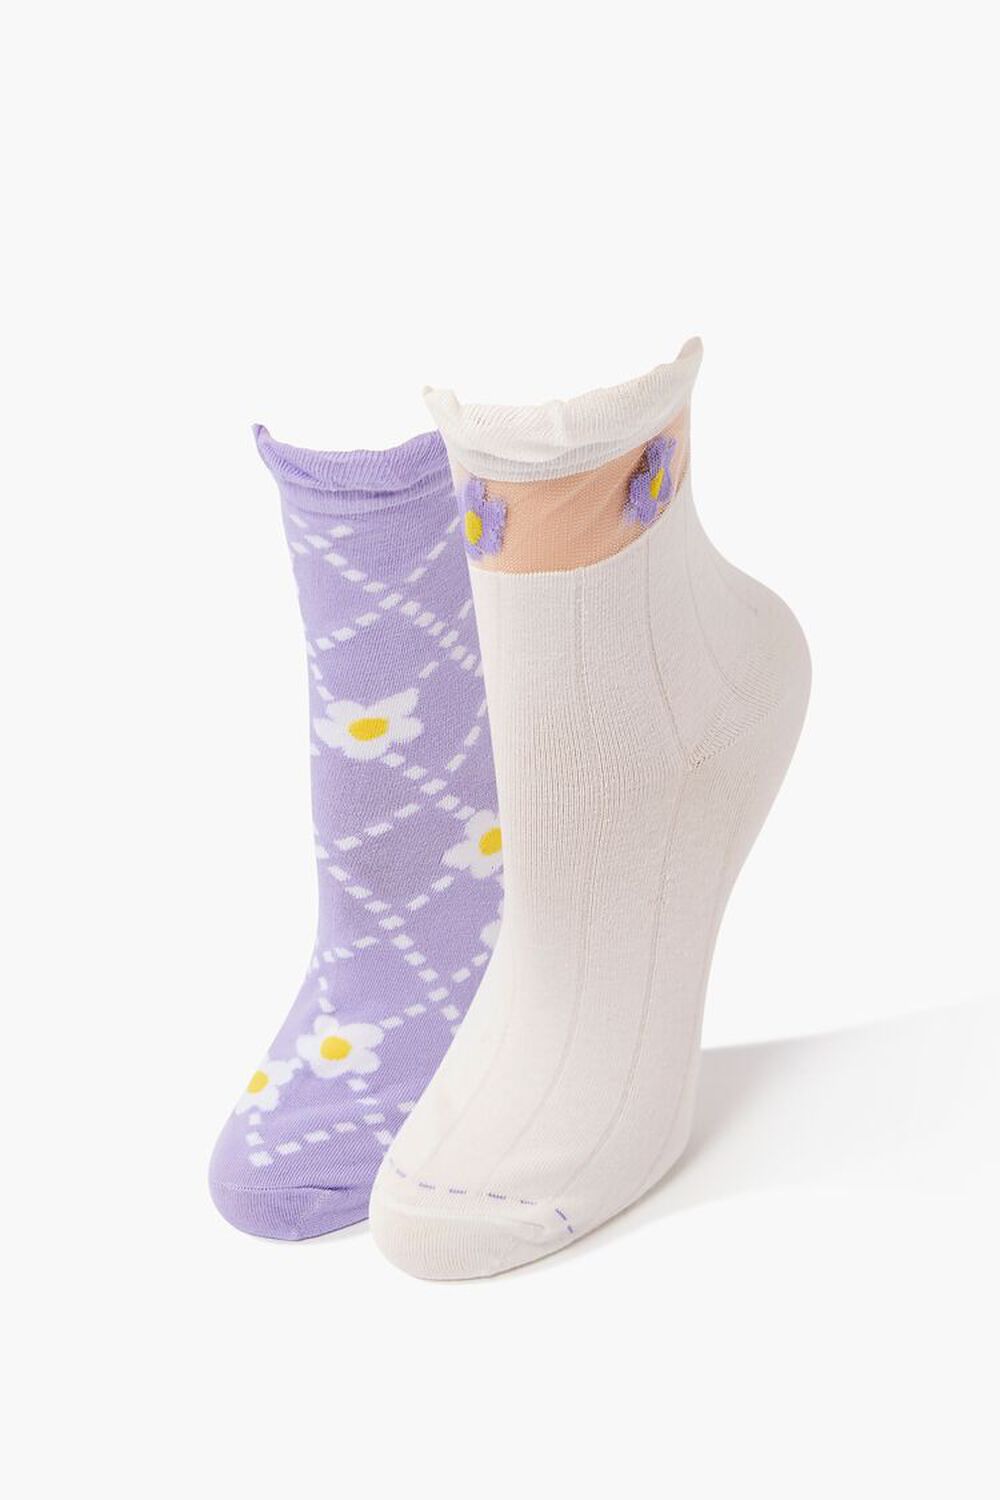 PURPLE/WHITE Floral Crew Socks Set - 2 pack, image 1